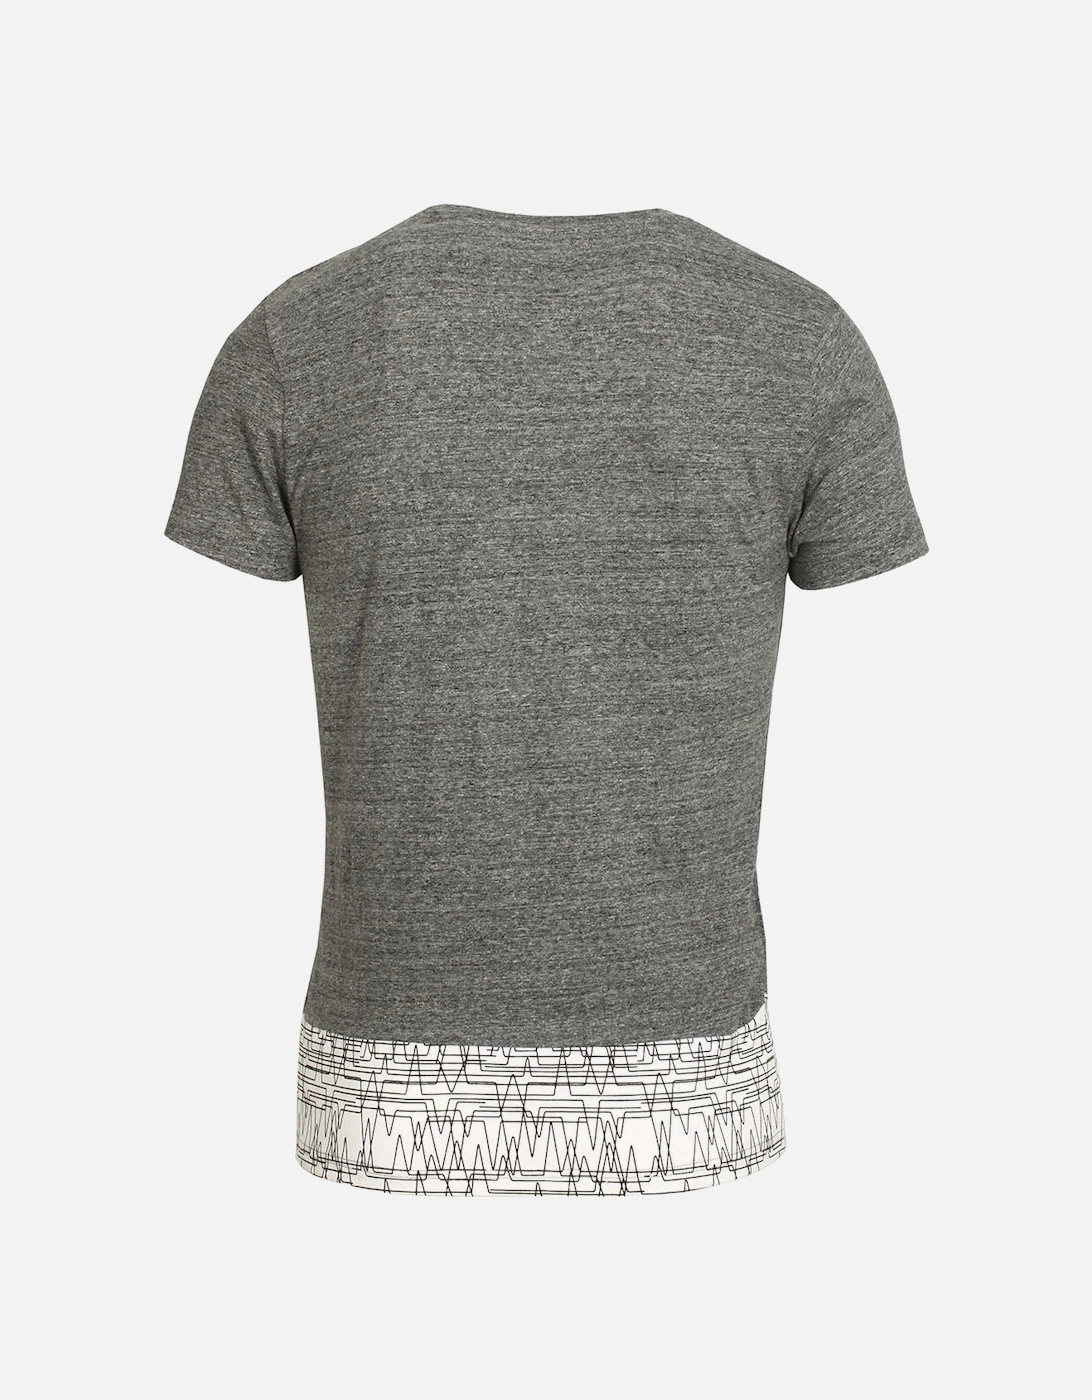 Asberg Splice T-Shirt With Linear Print - Grey Marl